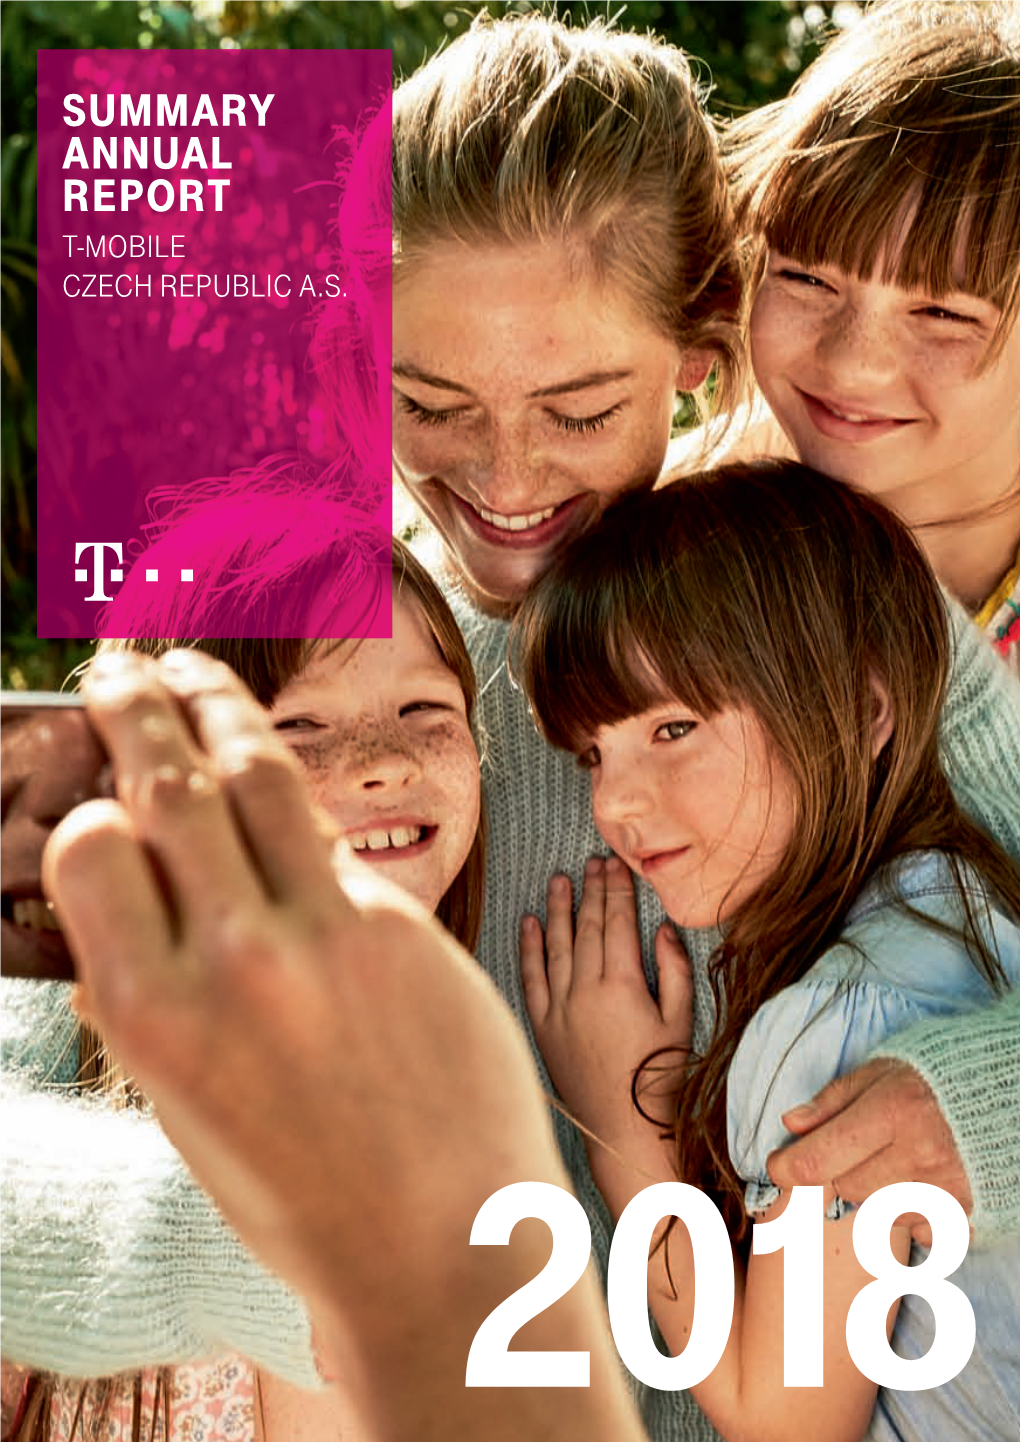 Summary Annual Report T-Mobile Czech Republic A.S